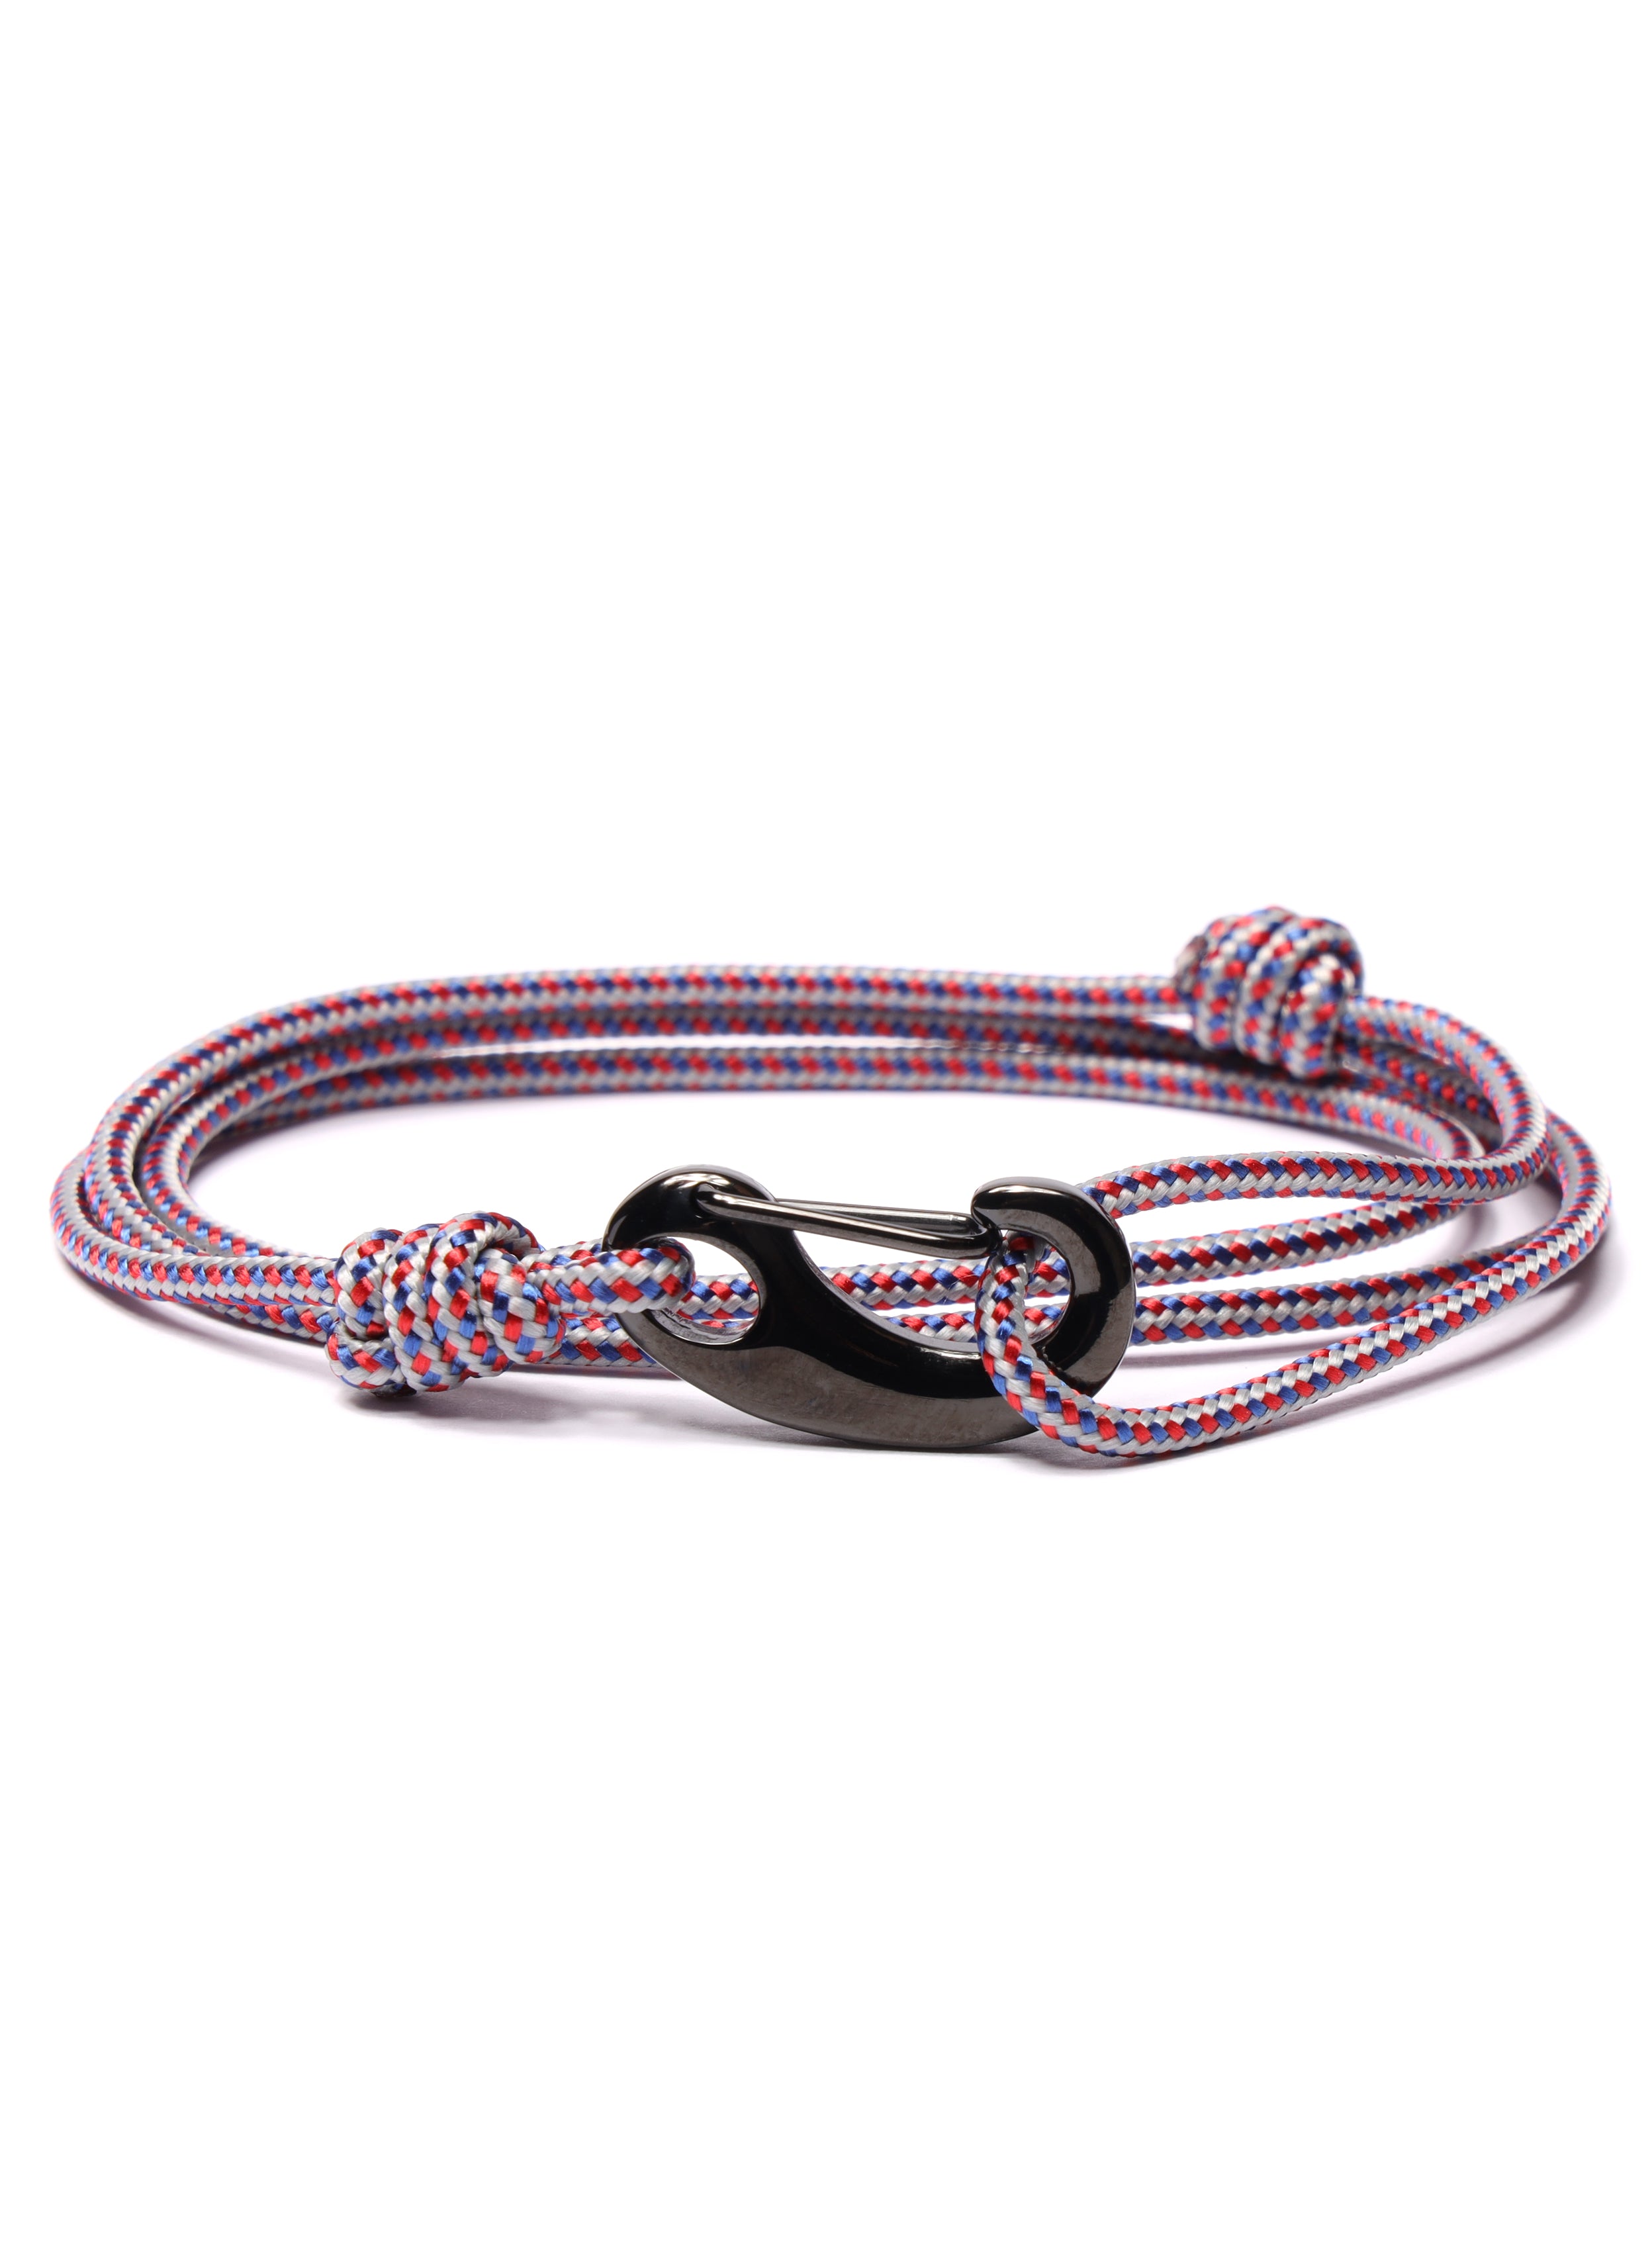 Gray + Red Tactical Cord Bracelet for Men (Black Clasp - 27K)